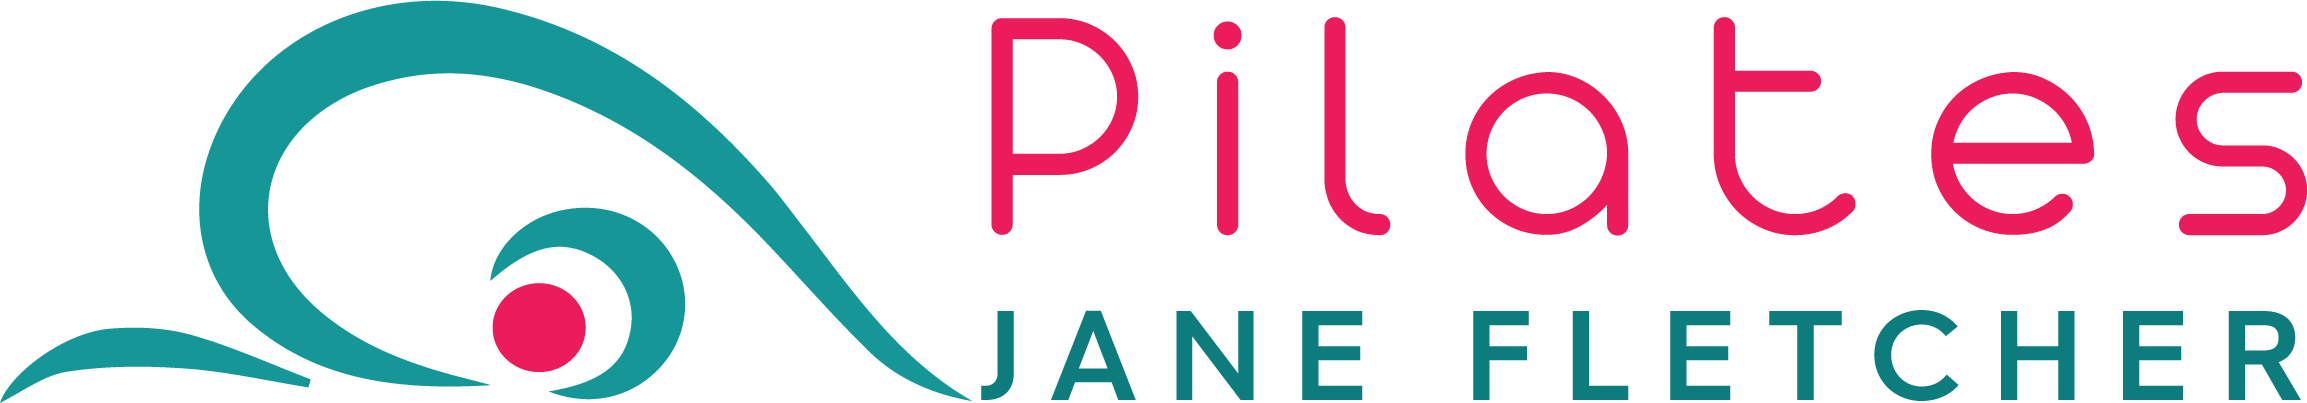 Jane Fletcher Pilates logo